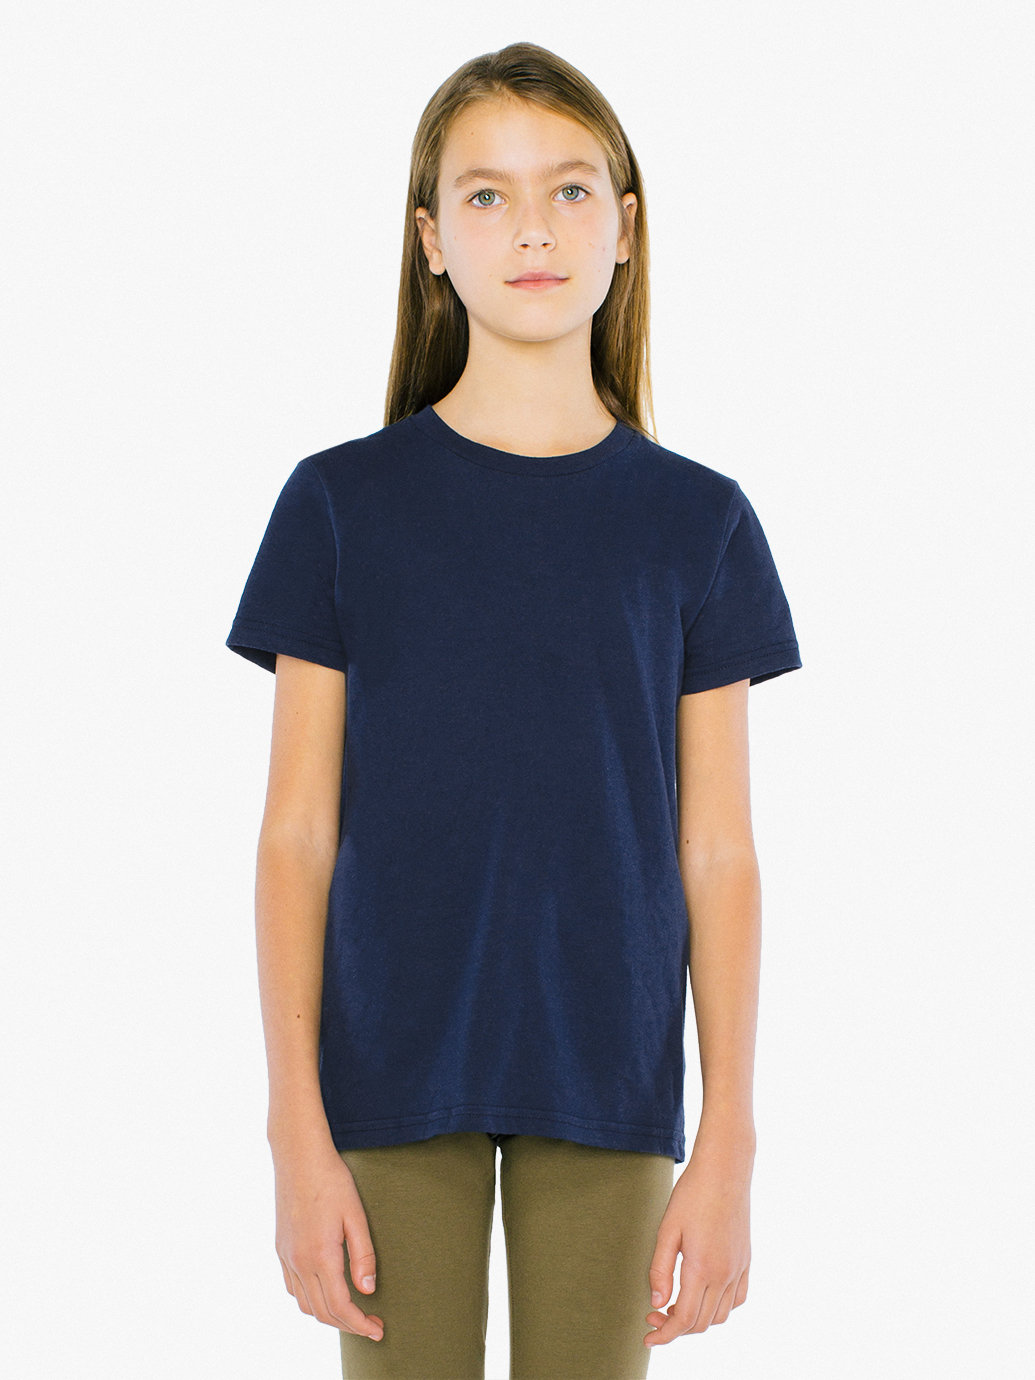 Unisex Youth Fine Jersey Crewneck T-Shirt | American Apparel